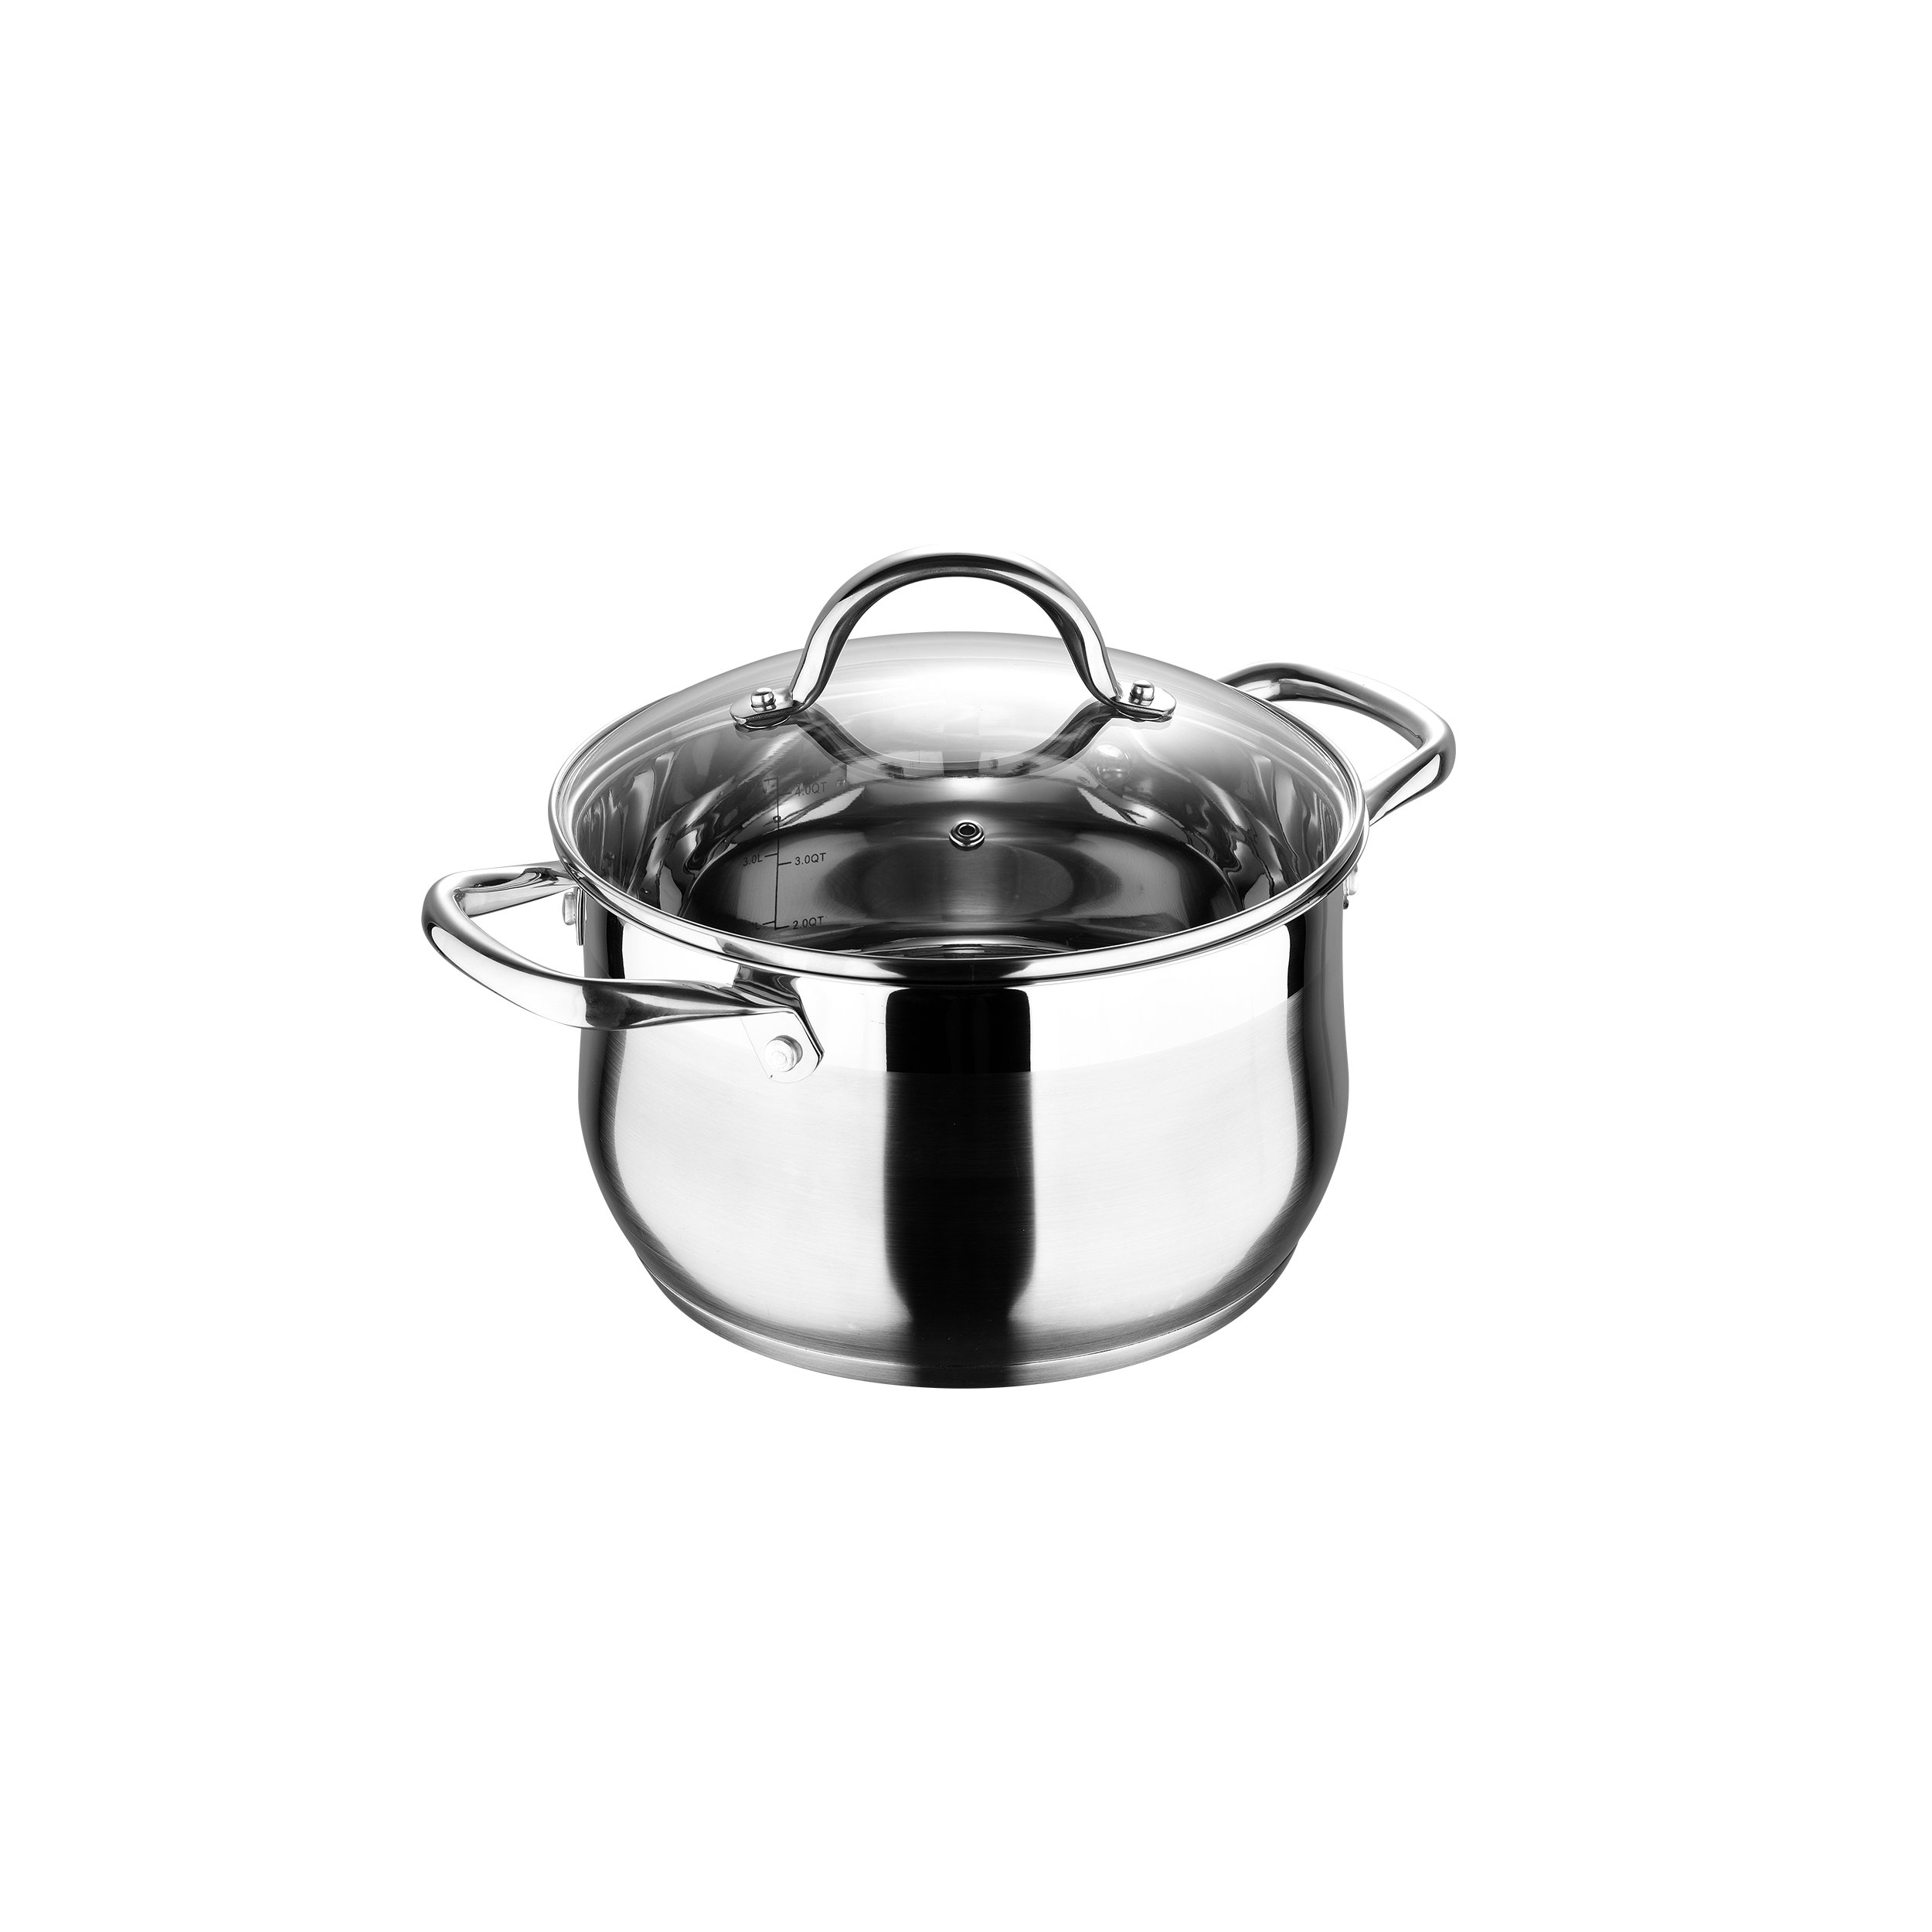 Bergner - Gourmet - 12 Piece Stainless Steel Cookware Set